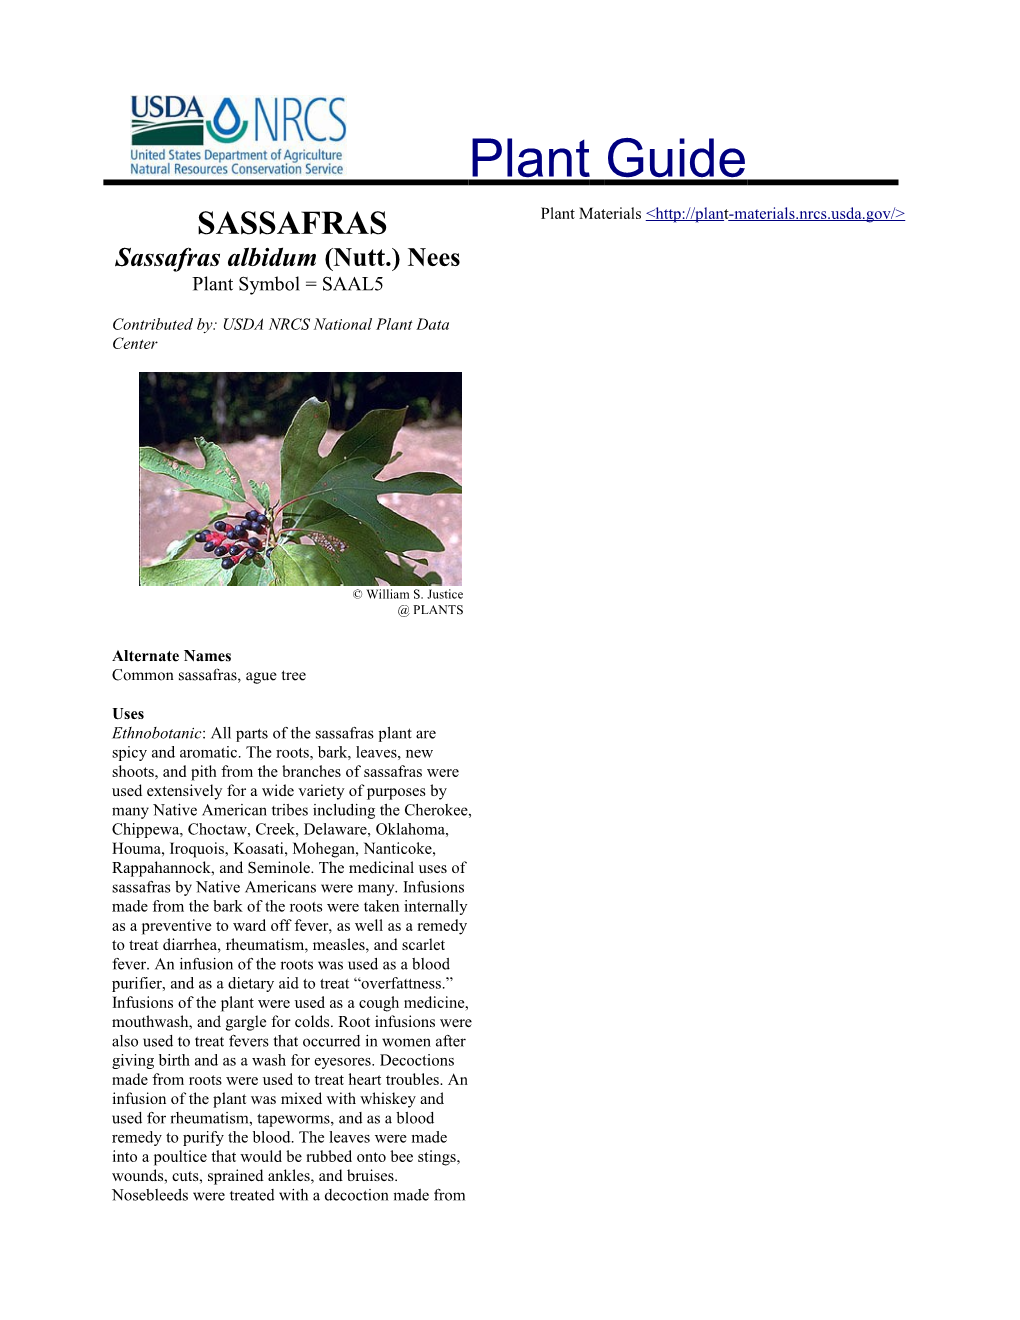 Sassafras (Sassafras Albidum) Plant Guide